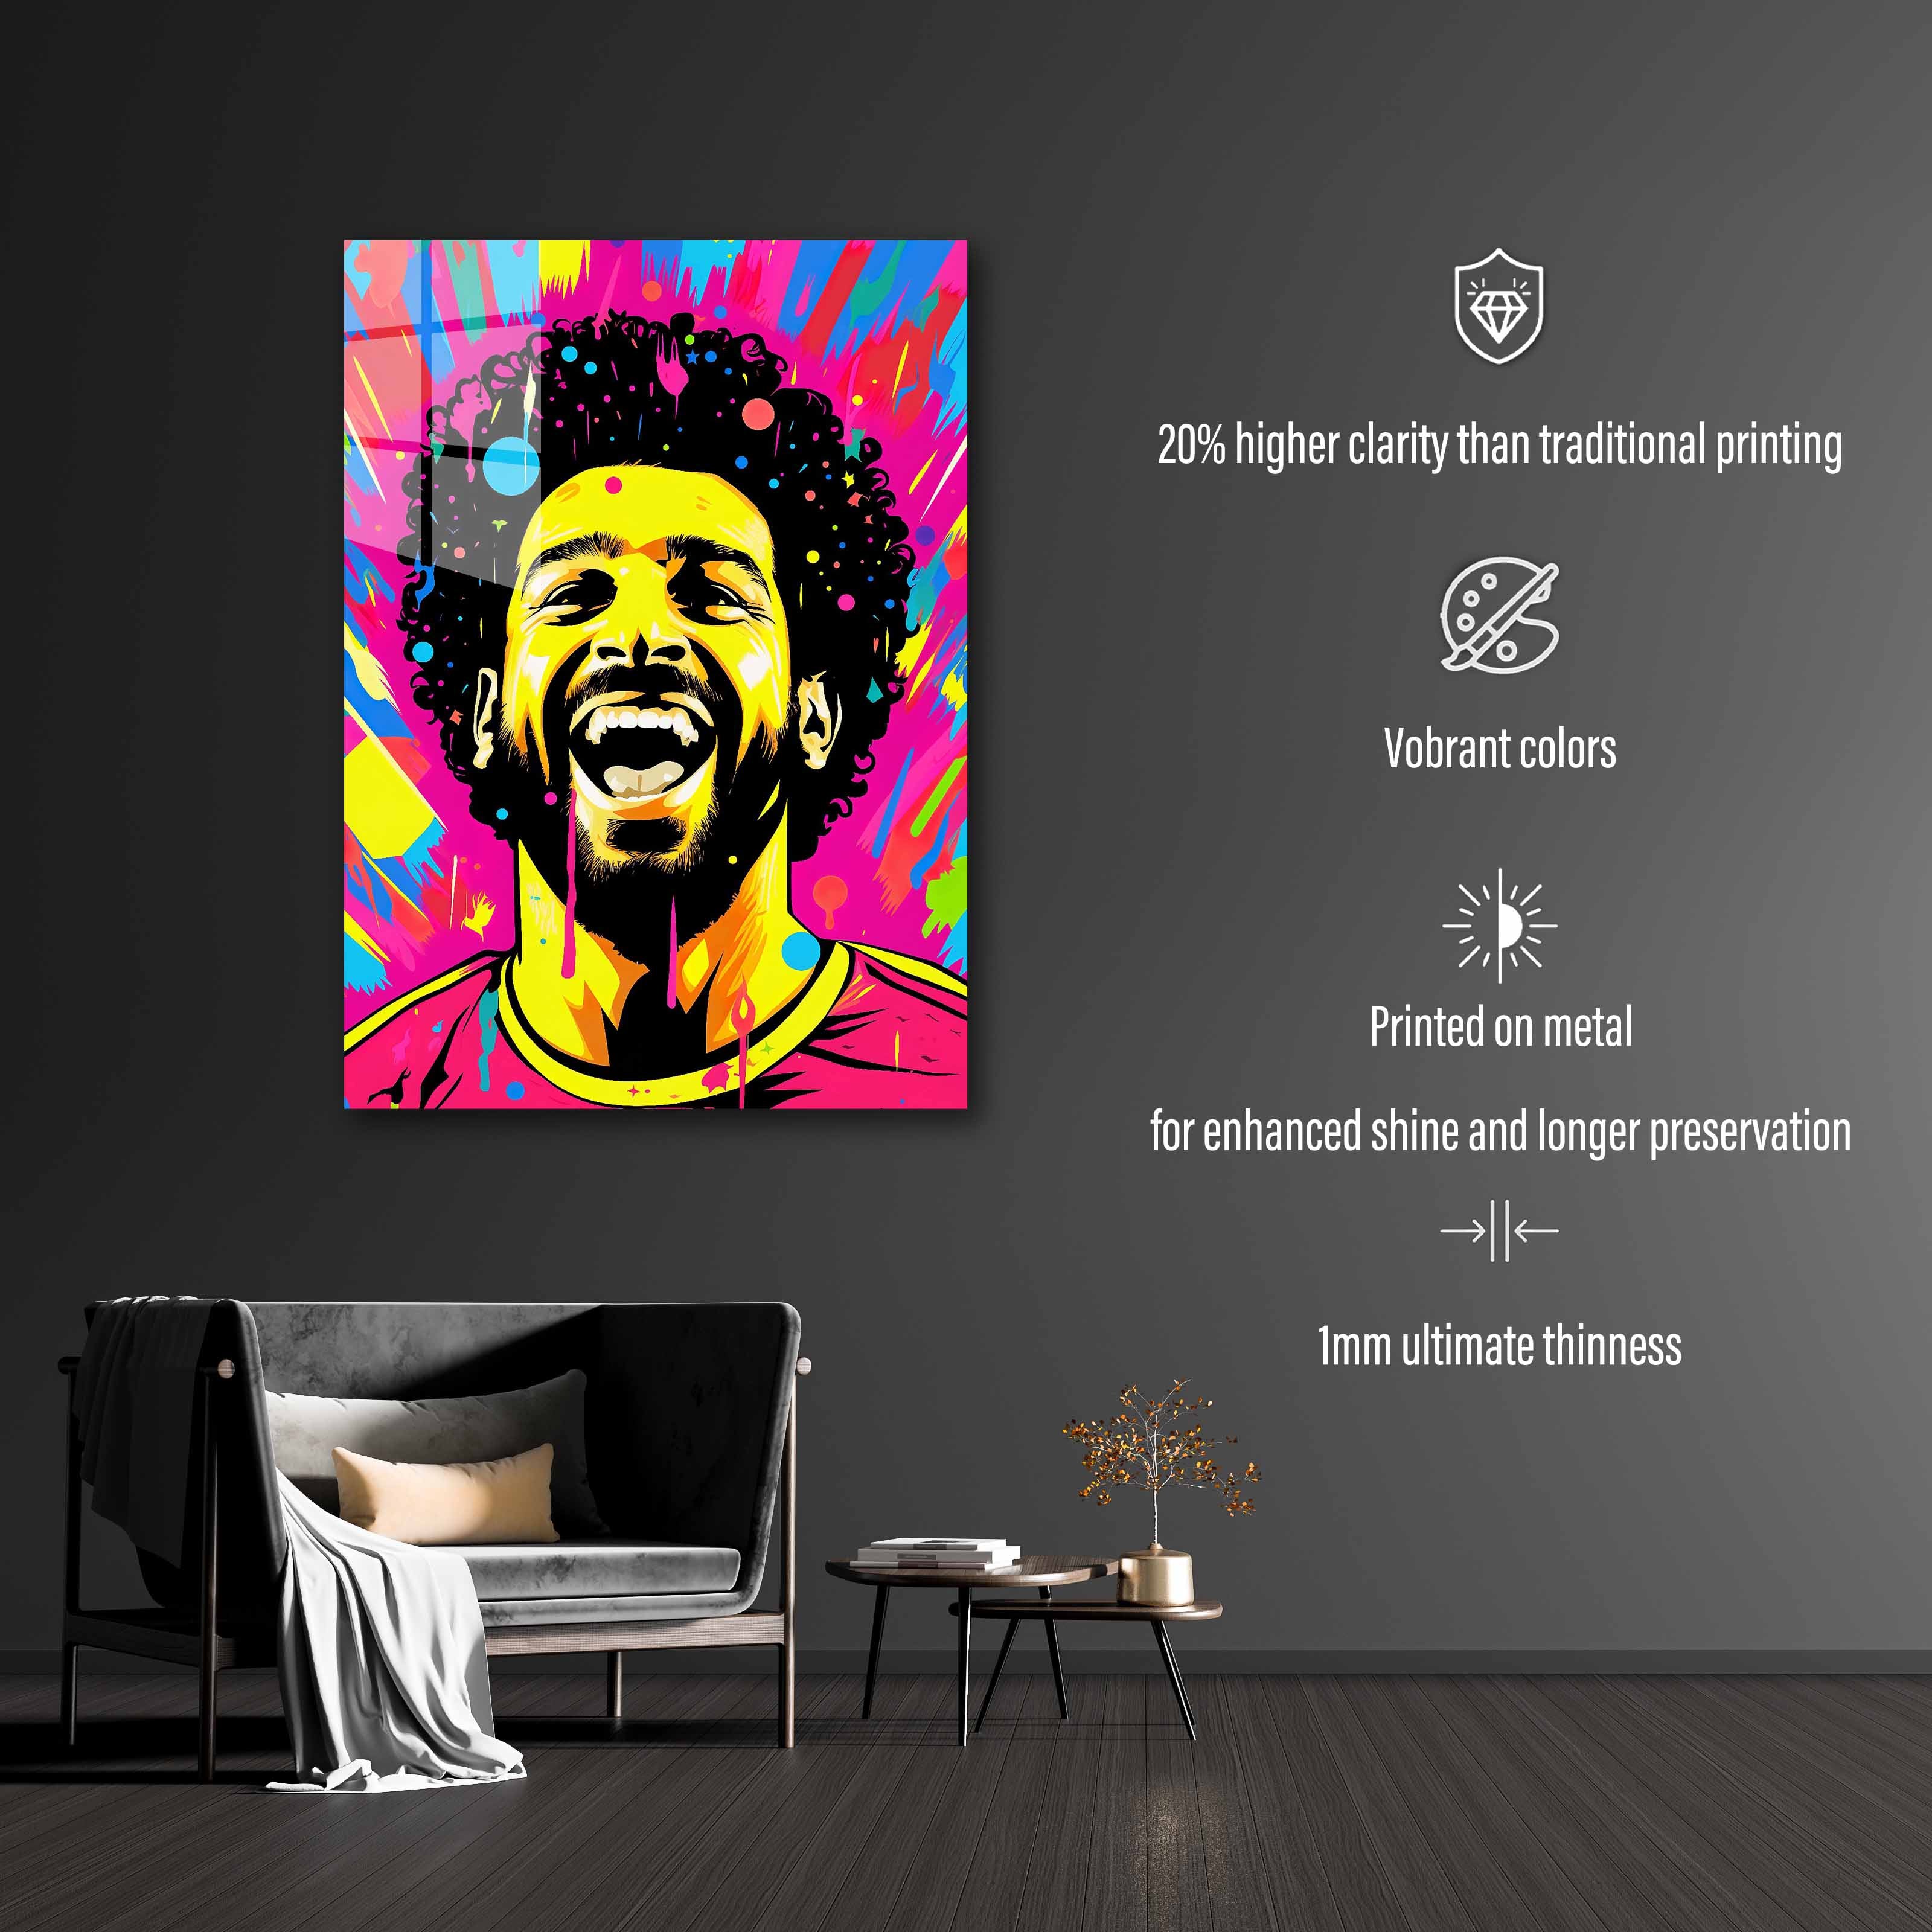 Mohamed        Salah-designed by @WATON CORET